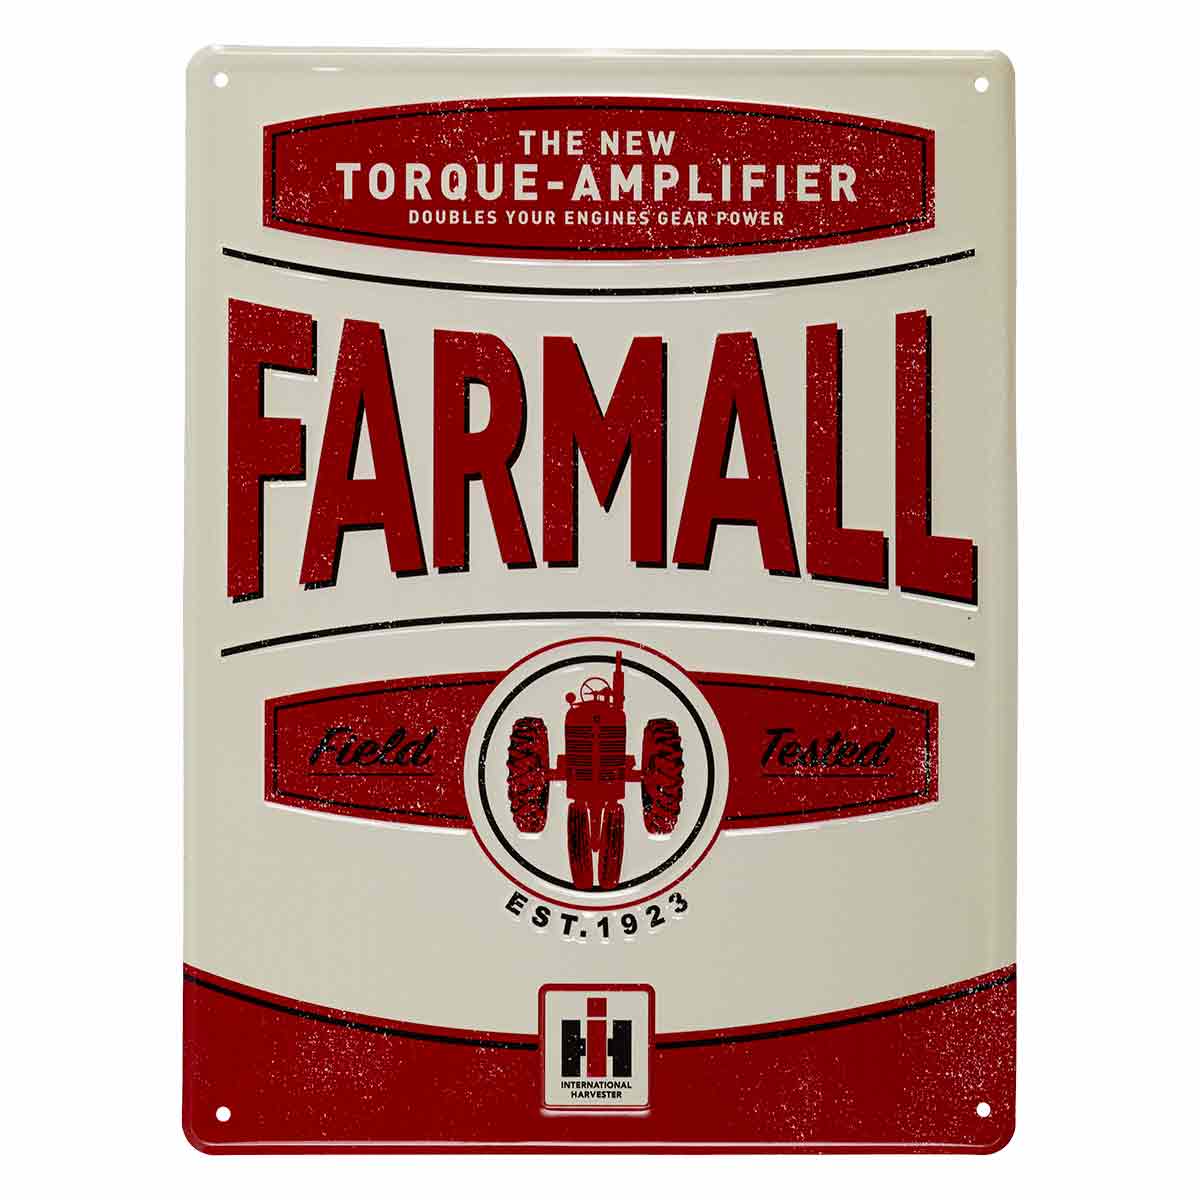 IH Farmall Torque Amplifier Vintage Sign